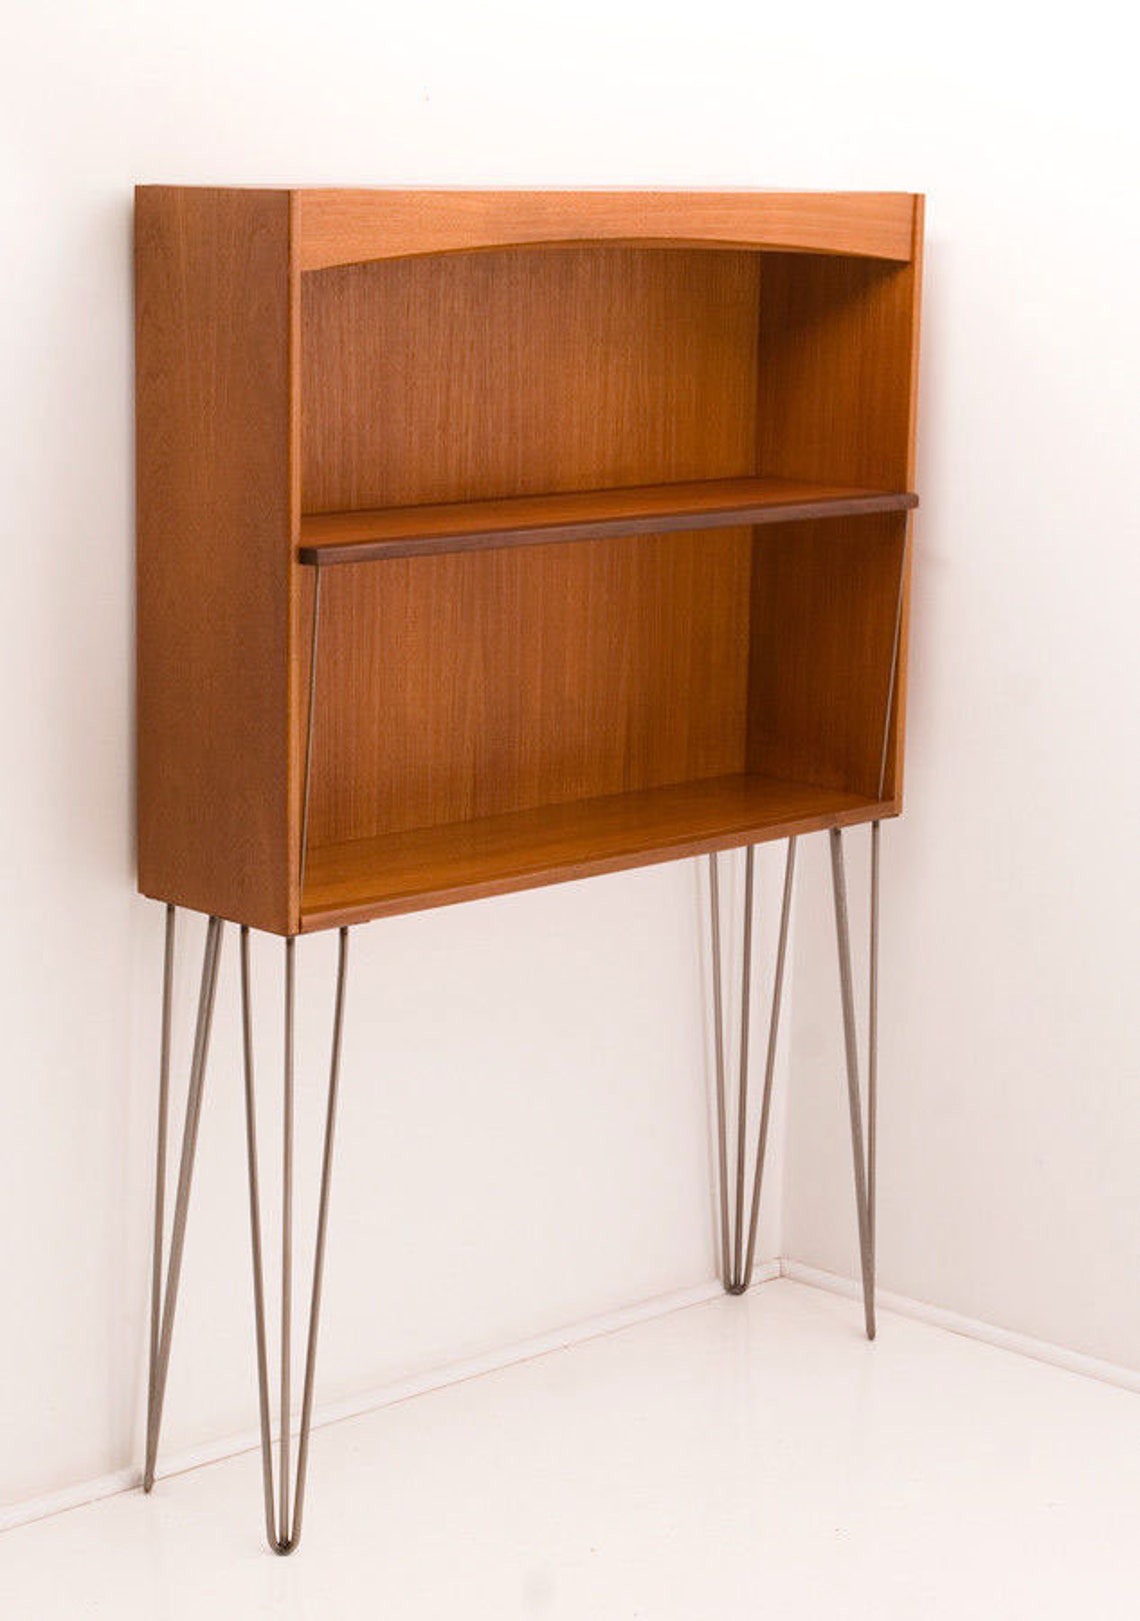 Vintage Nathan Mid Century Retro Teak Bookcase Display Cabinet | Etsy